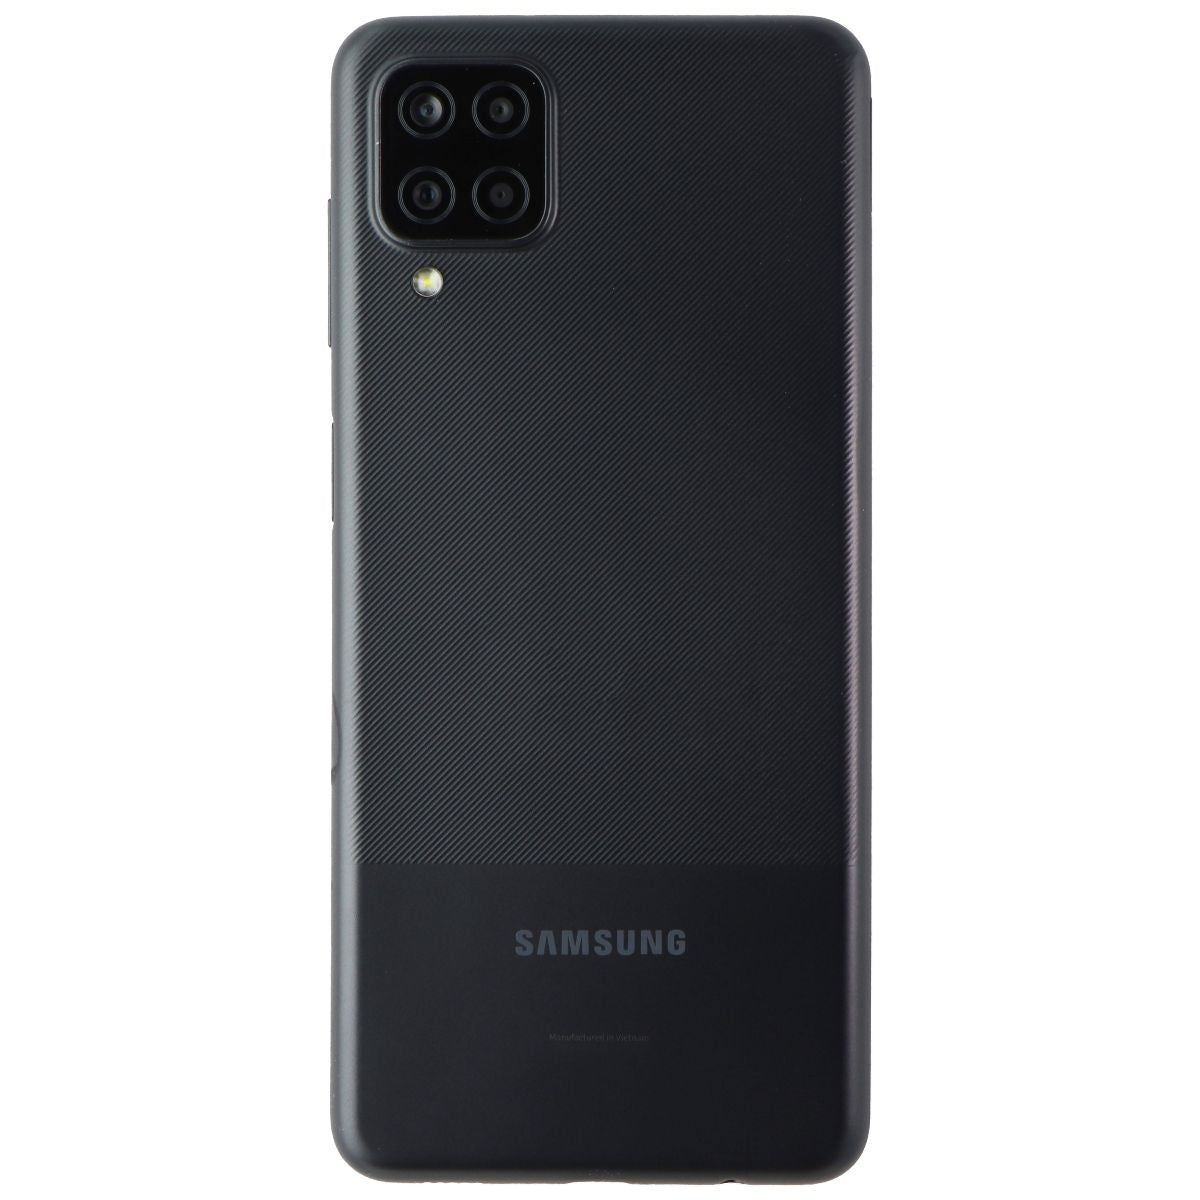 Samsung Galaxy A12 (SM-A125U1/DS) Unlocked - 128GB/Black Bad Fingerprint Sensor* Cell Phones & Smartphones Samsung    - Simple Cell Bulk Wholesale Pricing - USA Seller